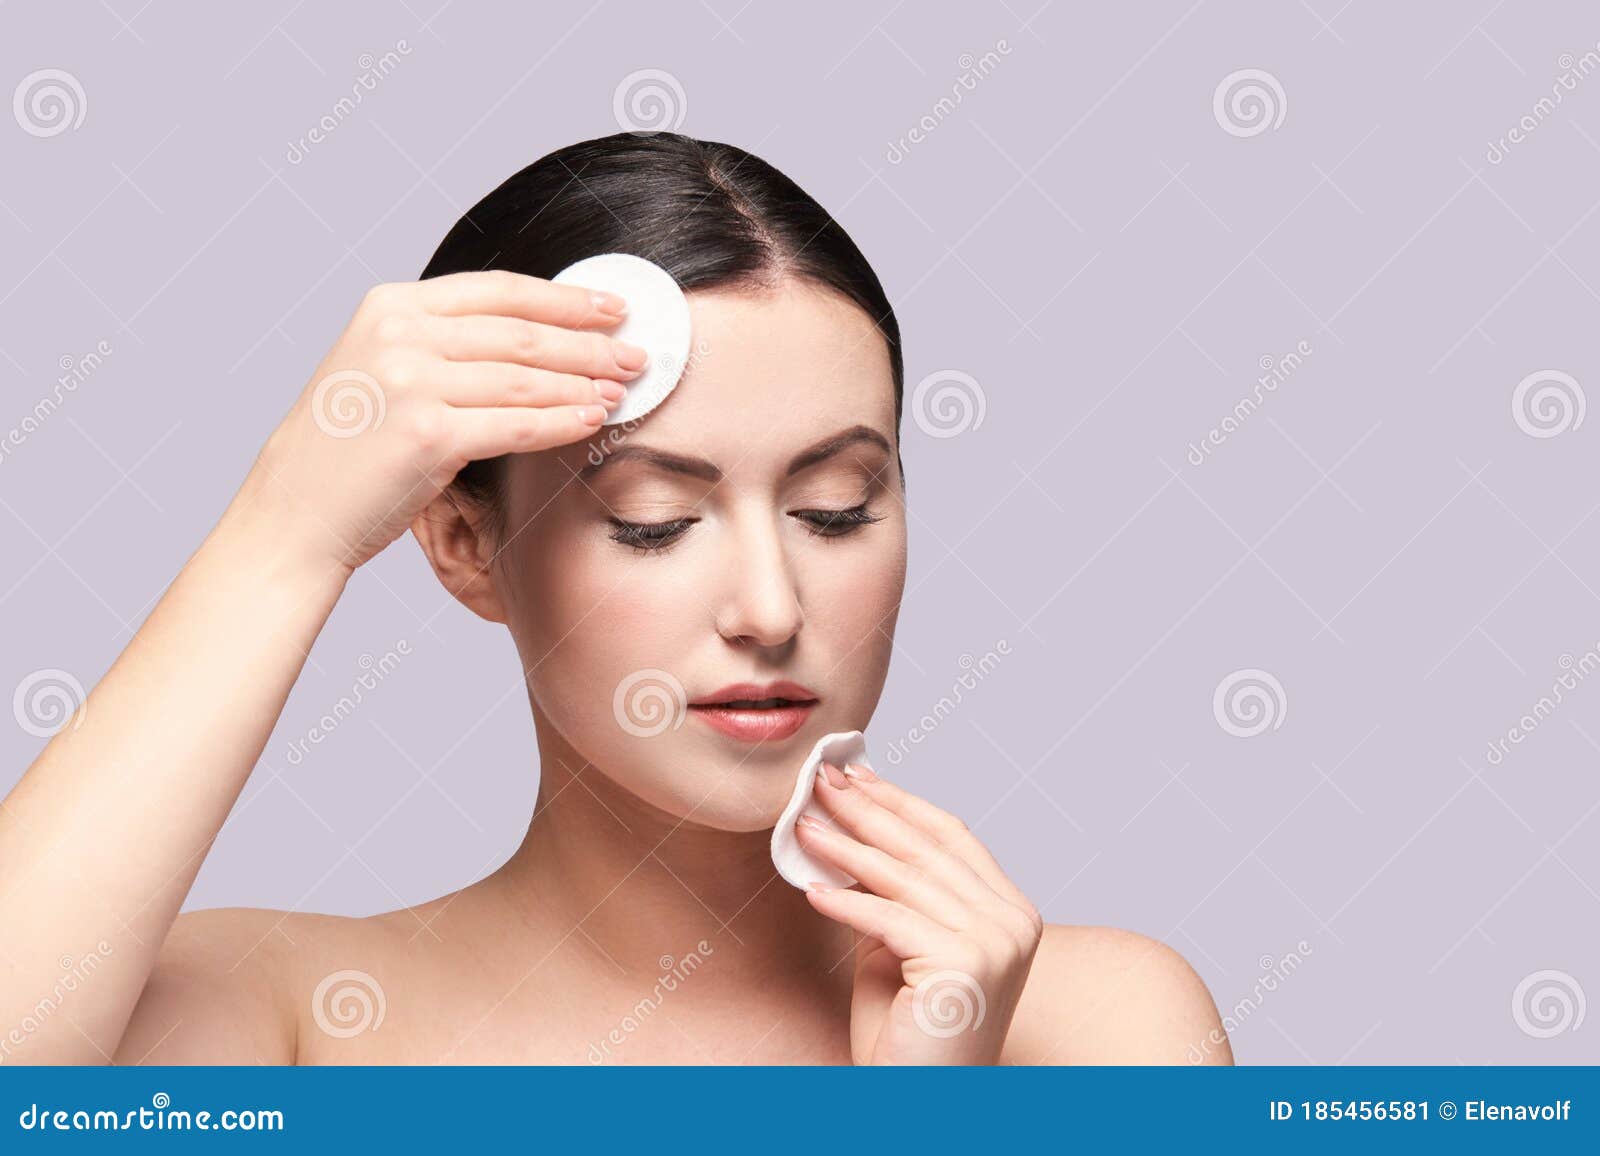 girl remove mascara. cotton pad. skin care evening routine